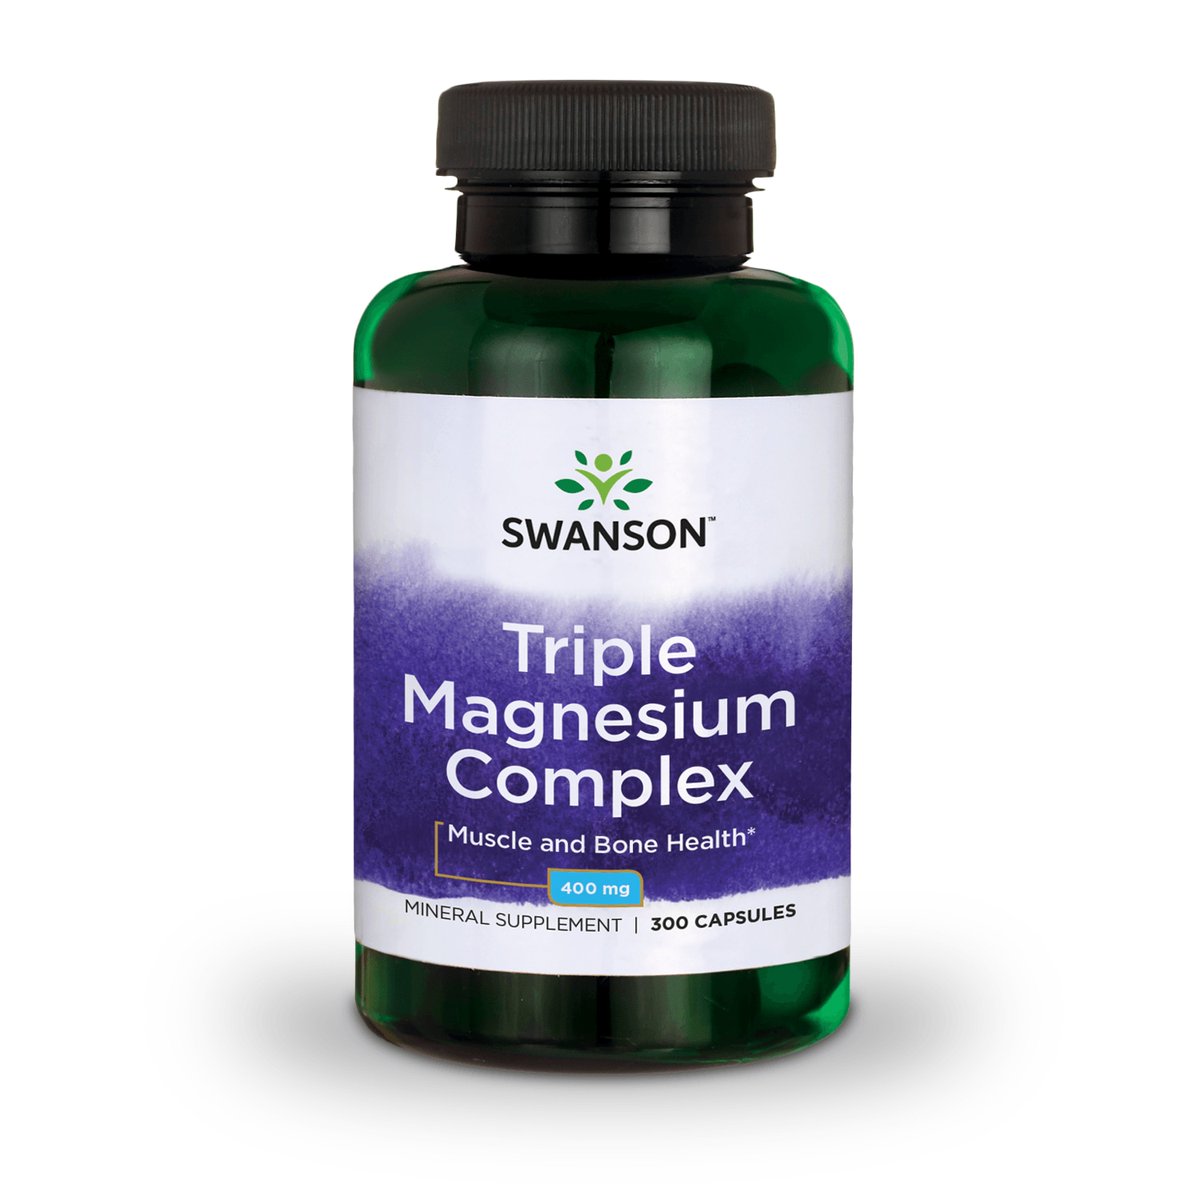 Swanson Triple Magnesium Complex Capsules, 400 mg, 300 Ct Item specifics ...6676https://omarhamad.com/?feed_id=204467post_urlhttps://omarhamad.com/?feed_id=204467post_url